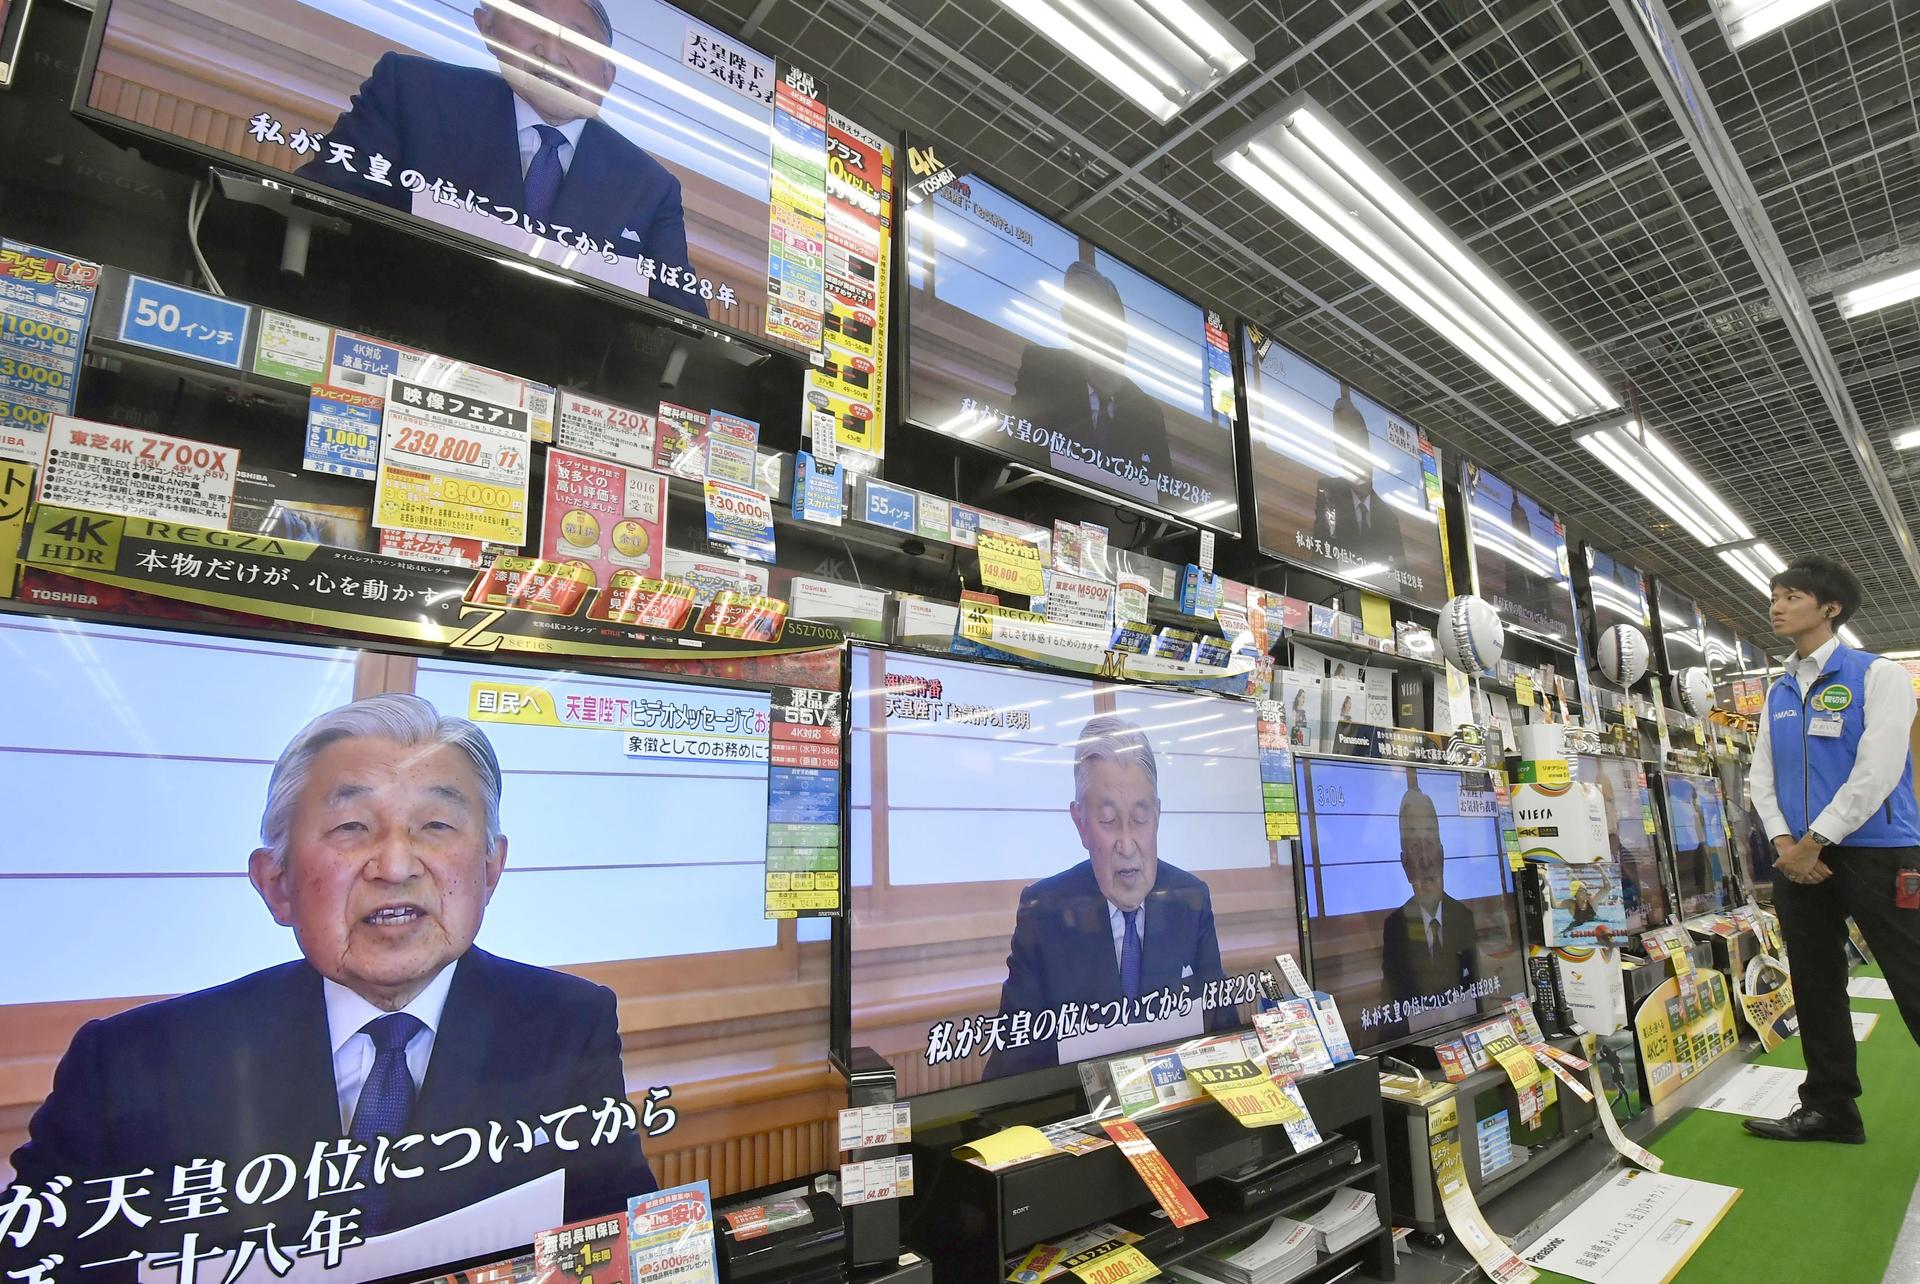 TV sets showing Japanese Emperor Akihito